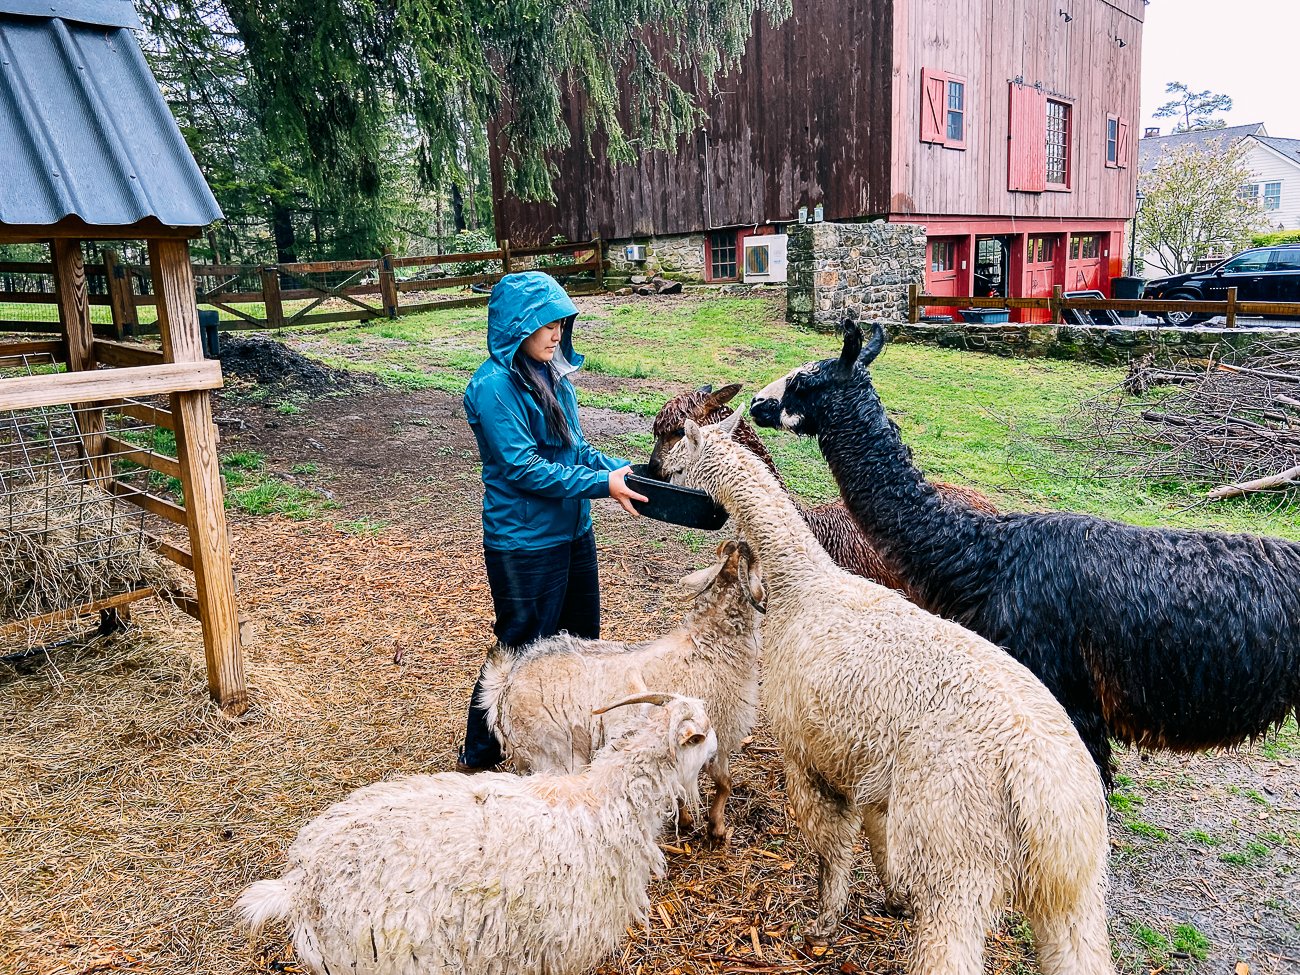 Sarah feeding the animals in the rain